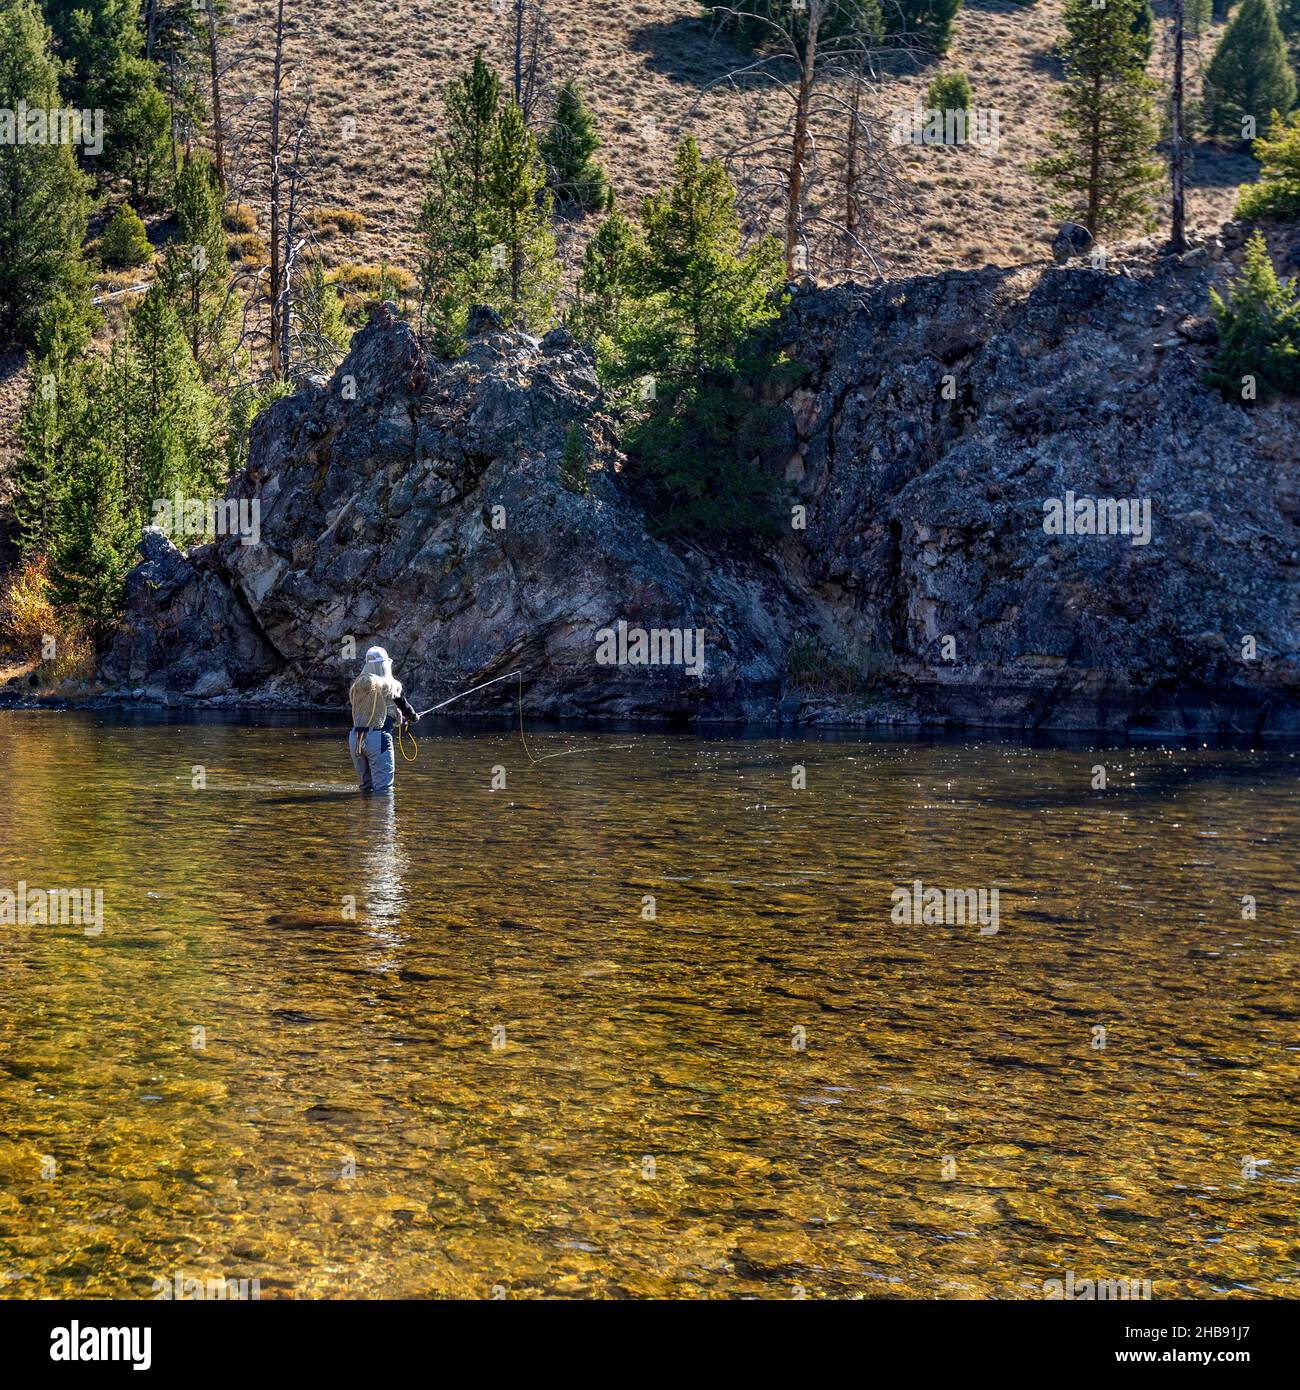 USA, Idaho, Stanley, Woman fly-fishing in Salmon River Stock Photo